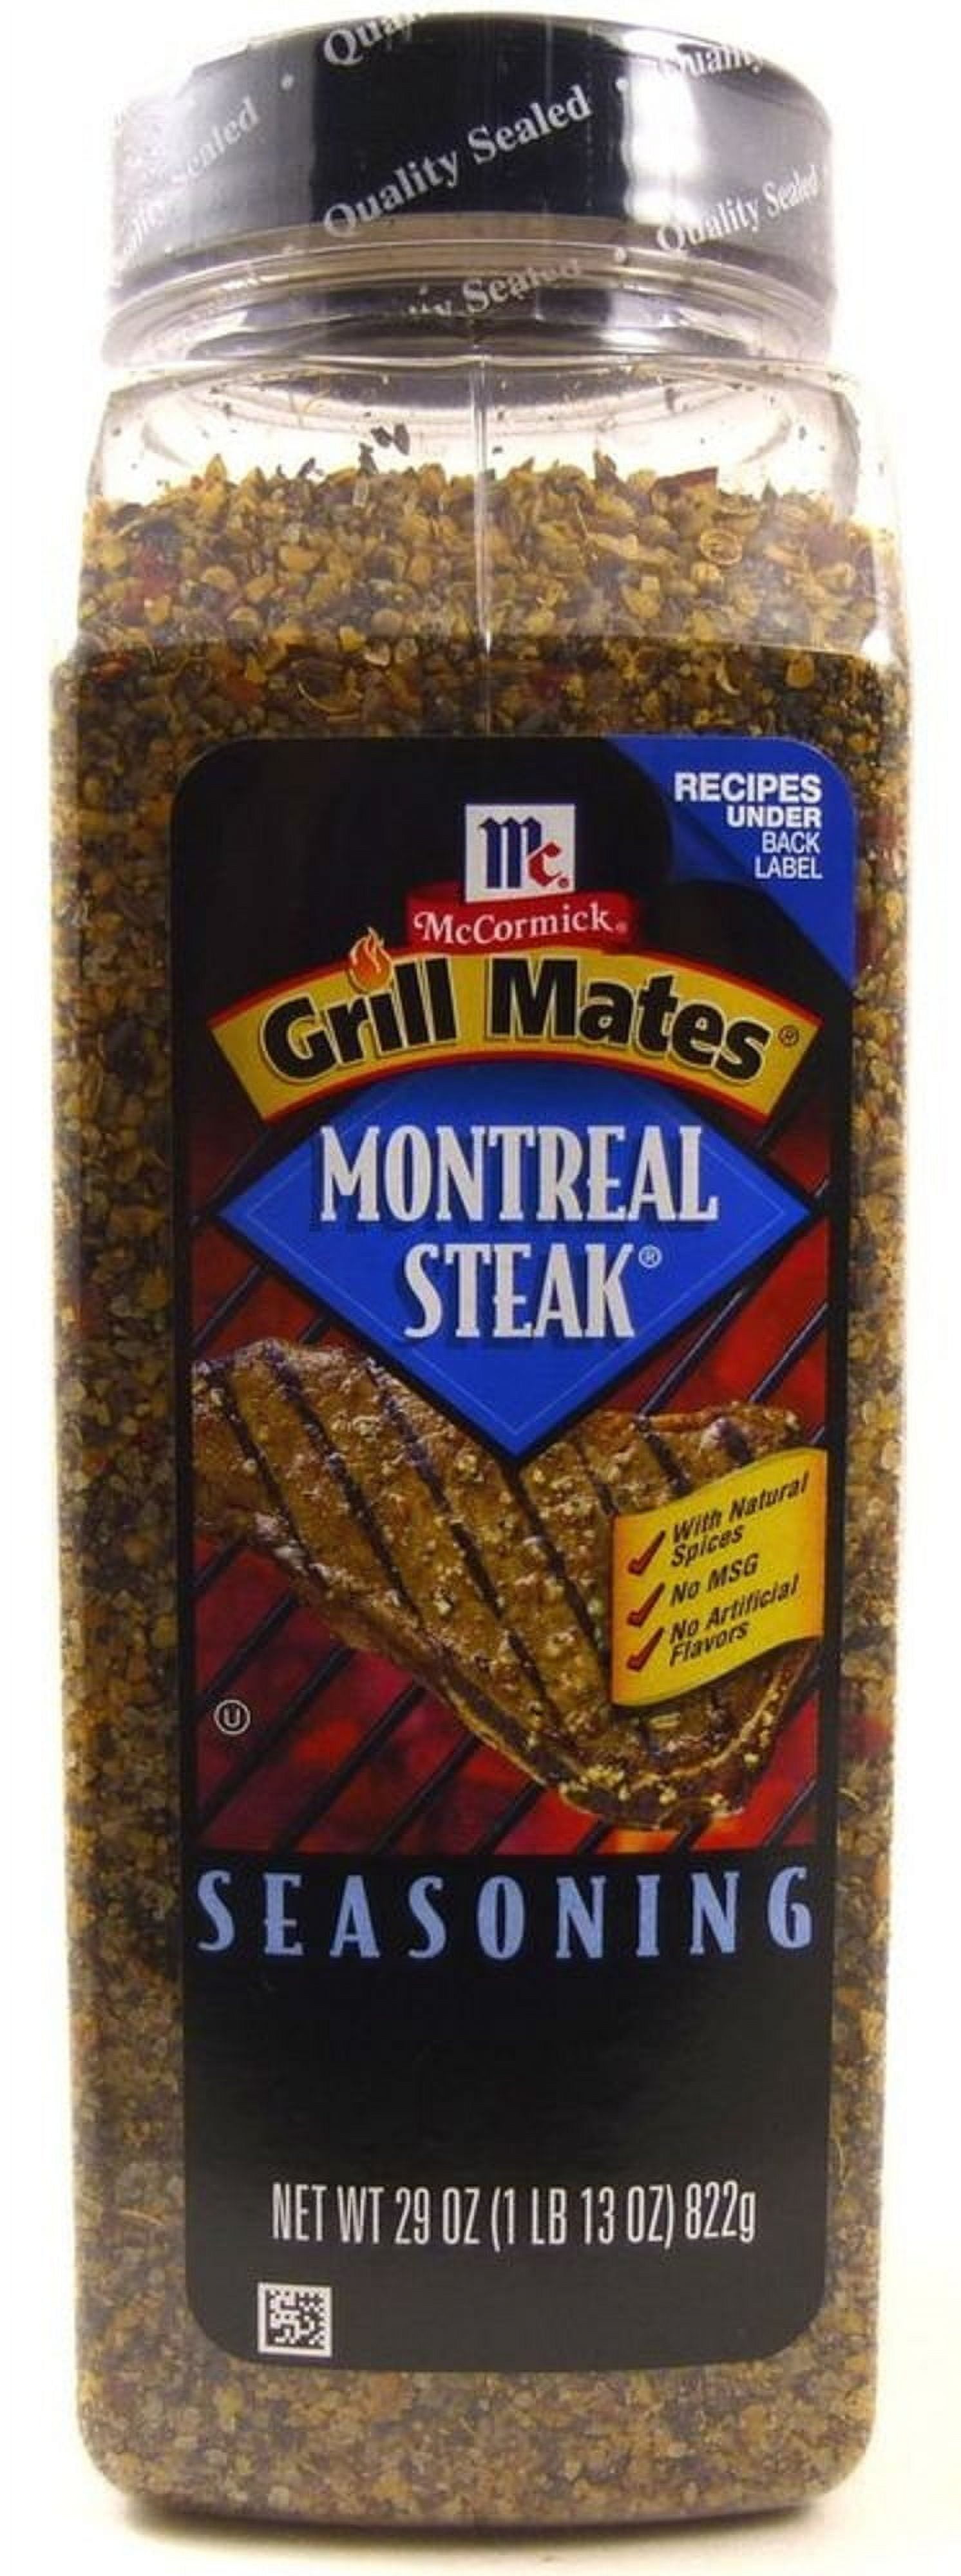 McCormick® Grill Mates® Smoky Montreal Steak Seasoning